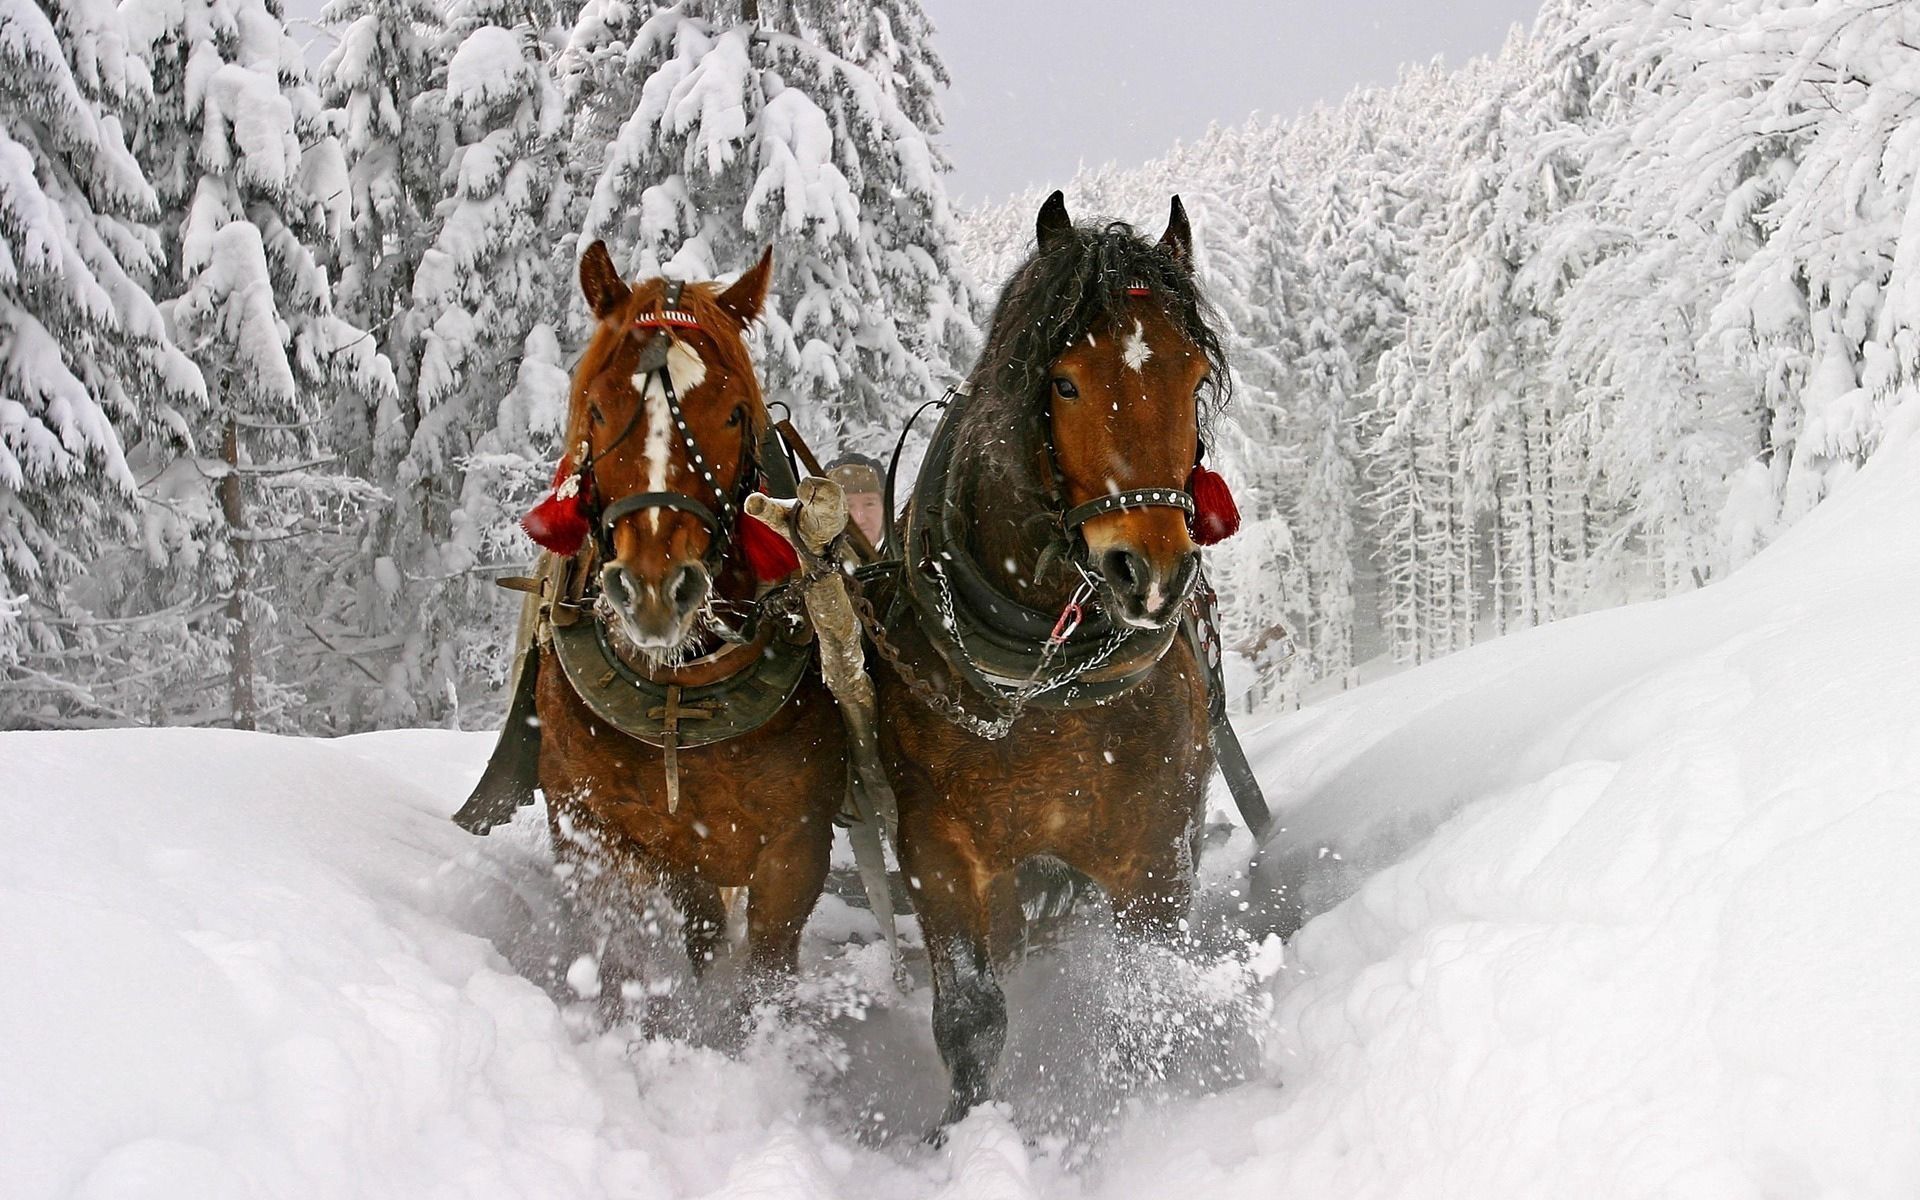 149107 descargar imagen animales, nieve, caballo, equipo, trineo, equitación, conducir: fondos de pantalla y protectores de pantalla gratis